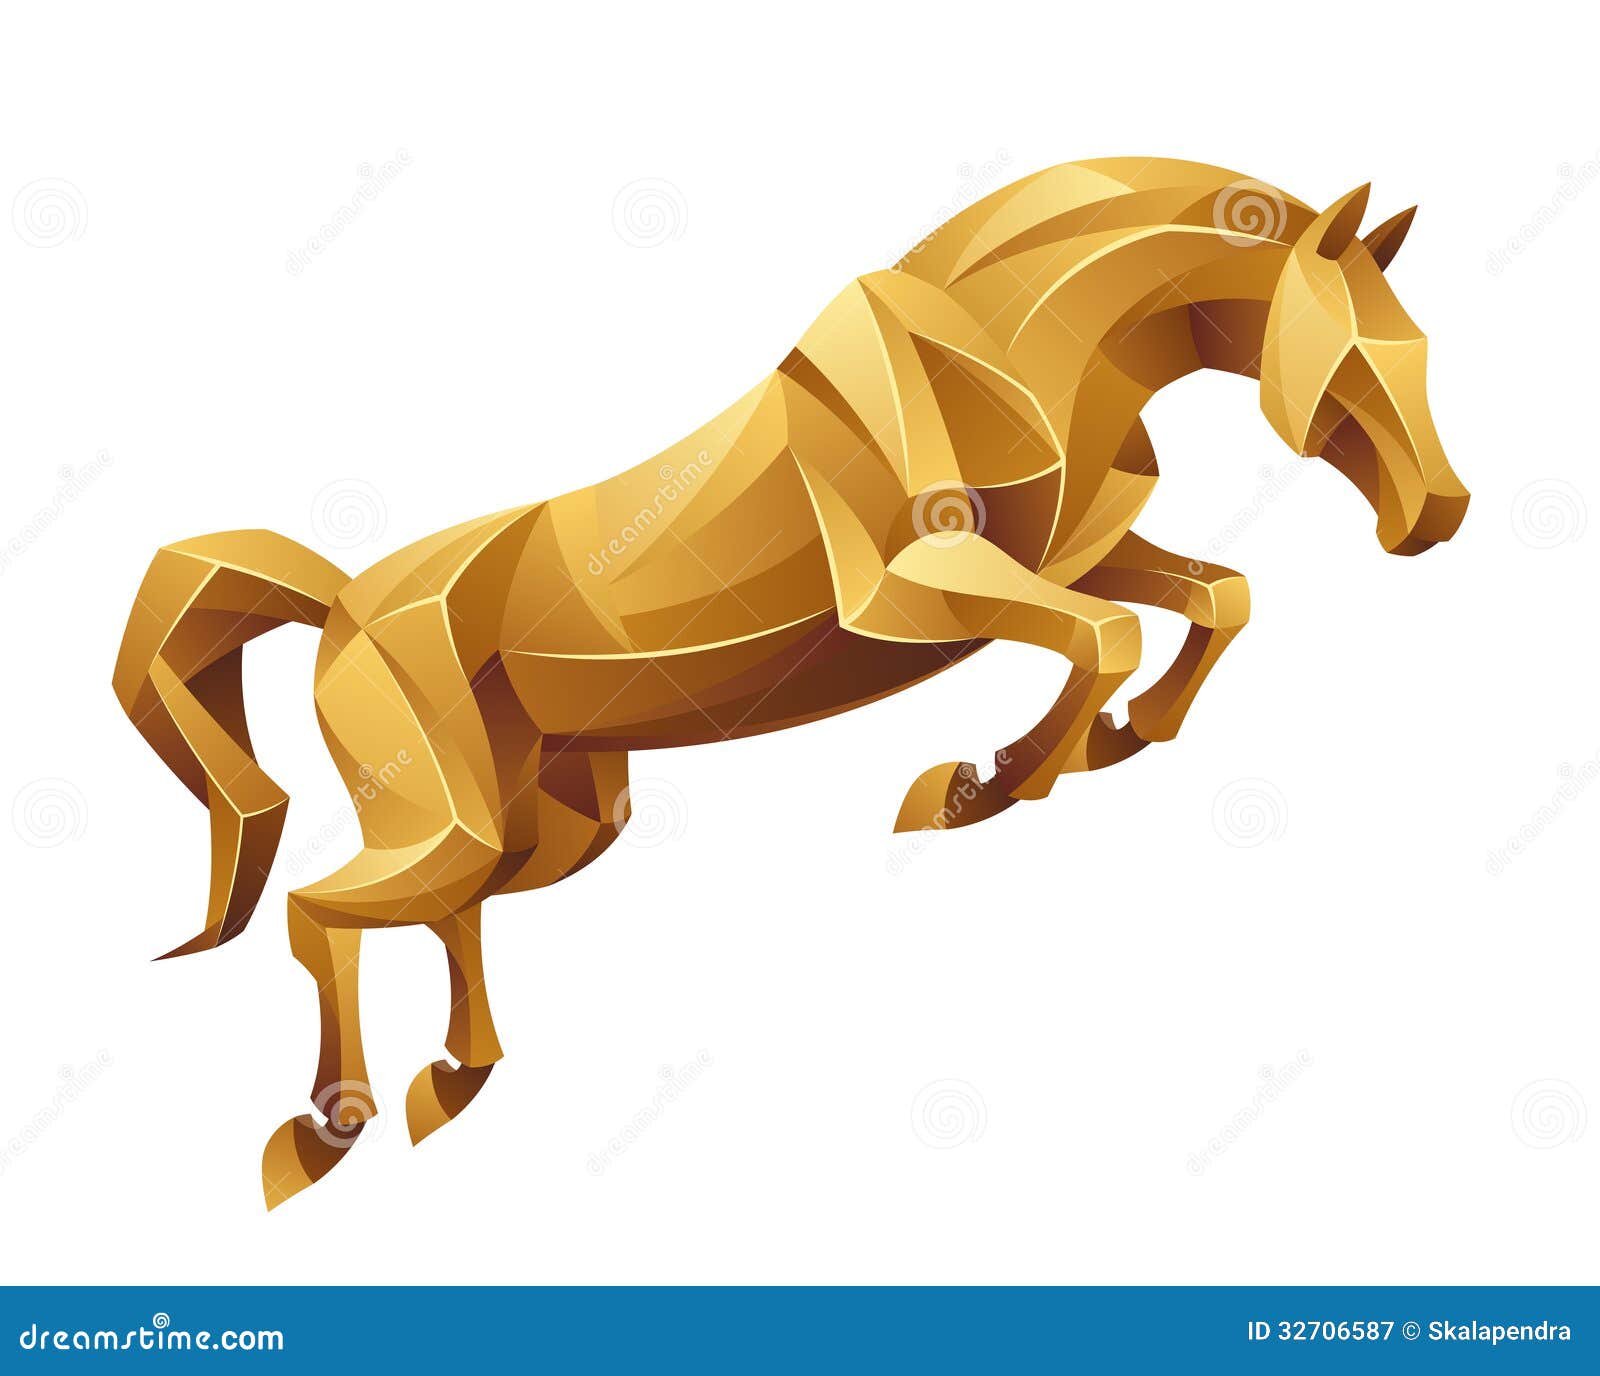 Golden horse jumping stock vector. Illustration of iron - 32706587